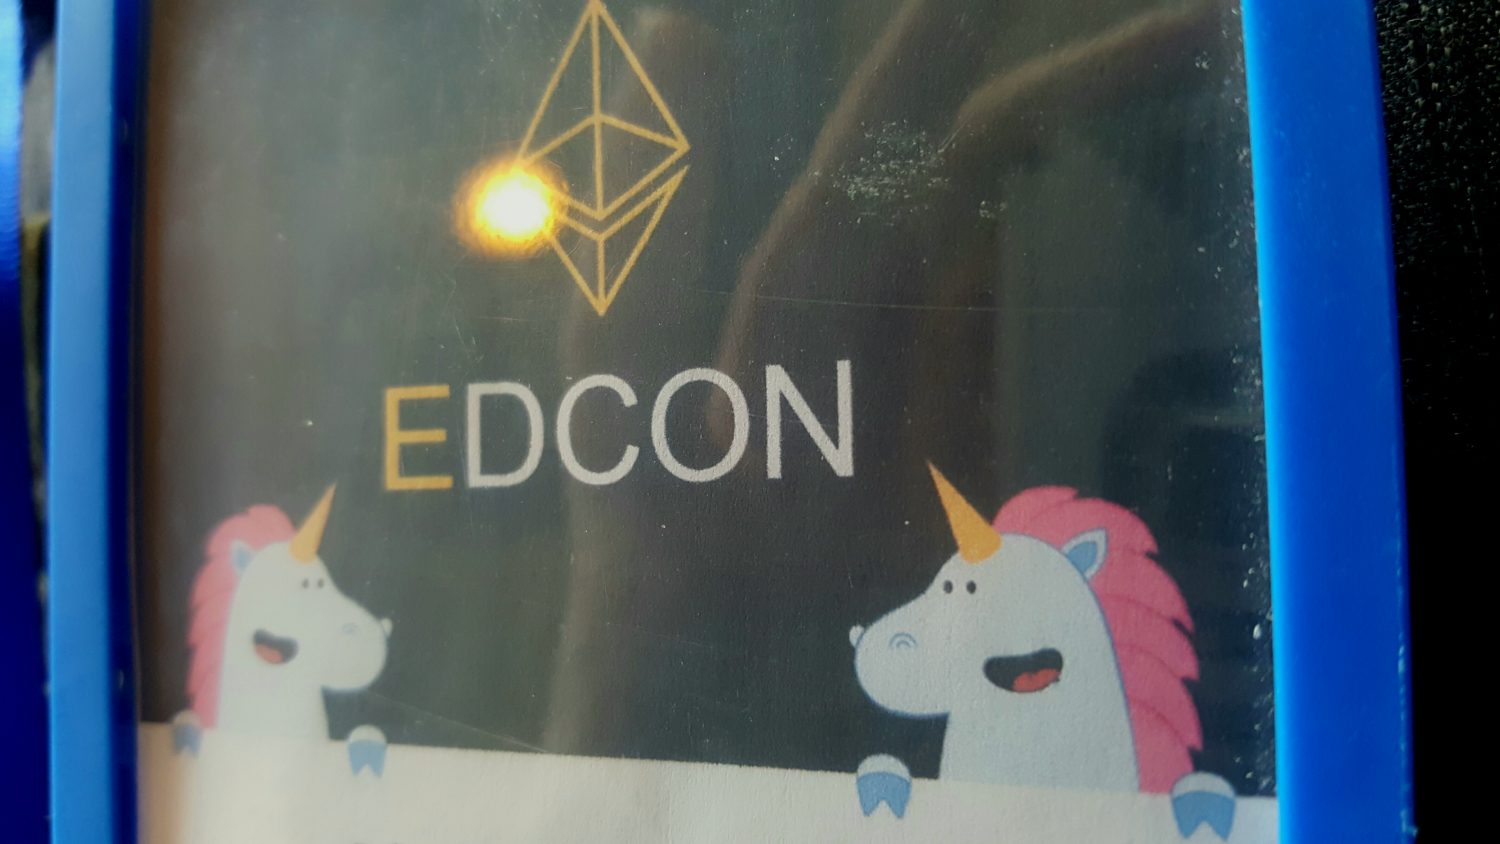 Secretive ‘Enterprise Ethereum’ Project Gets Mixed Reactions at EDCON 2017